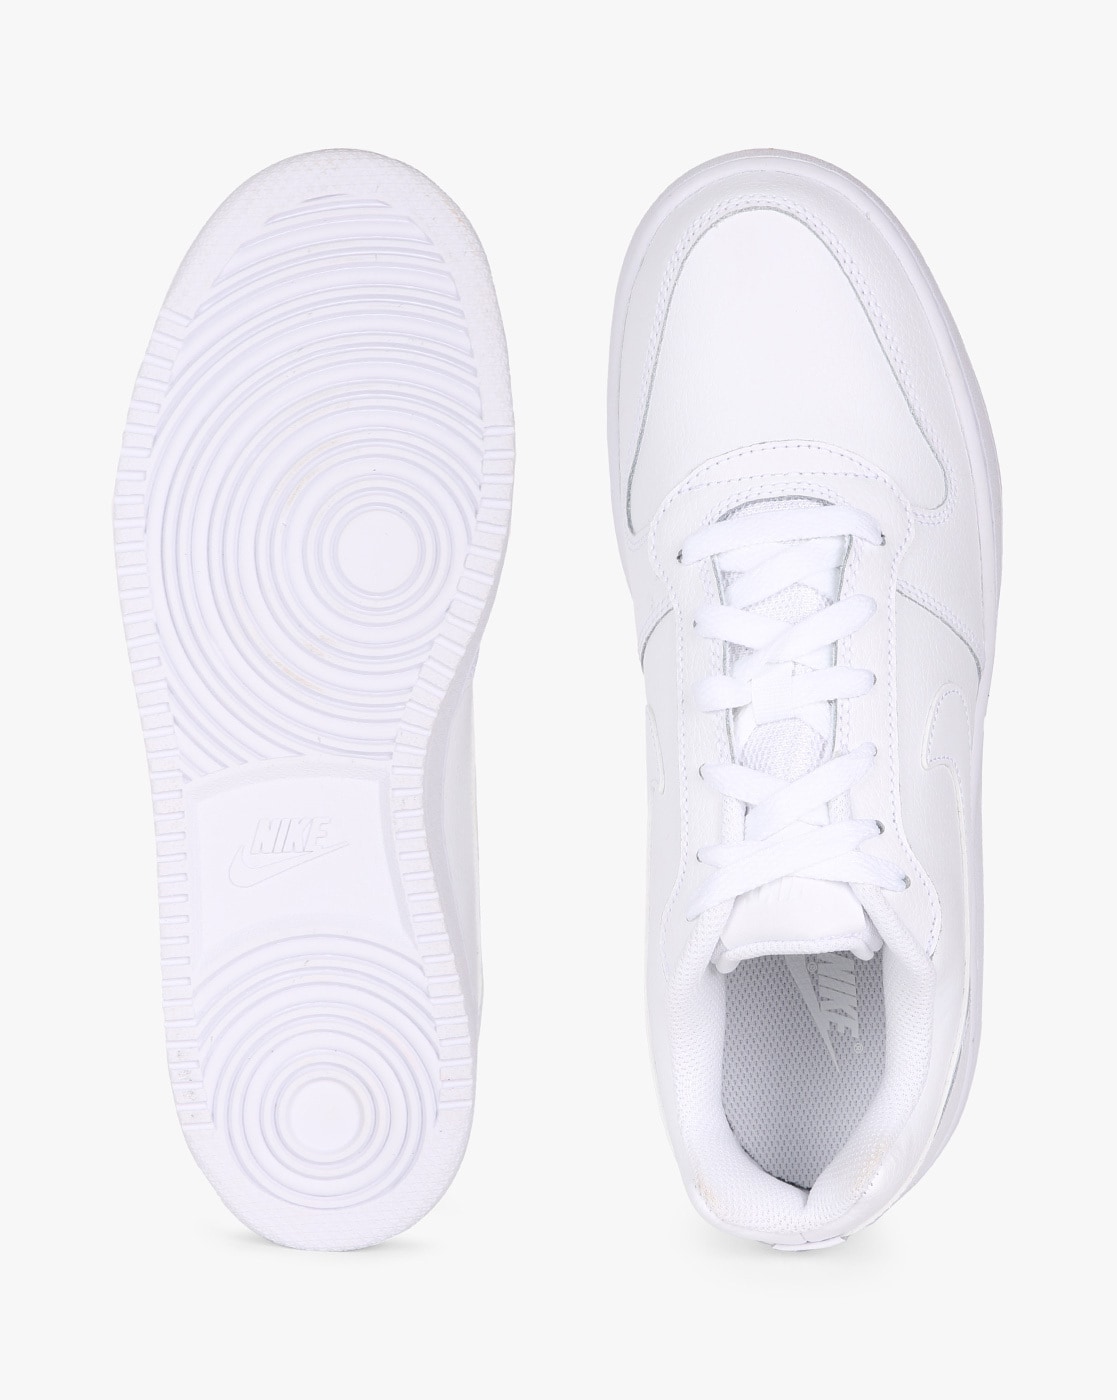 Nike Ebernon Low BV1167-100 Men's Size 10 All White Black Bottom Casual  Sneakers | eBay